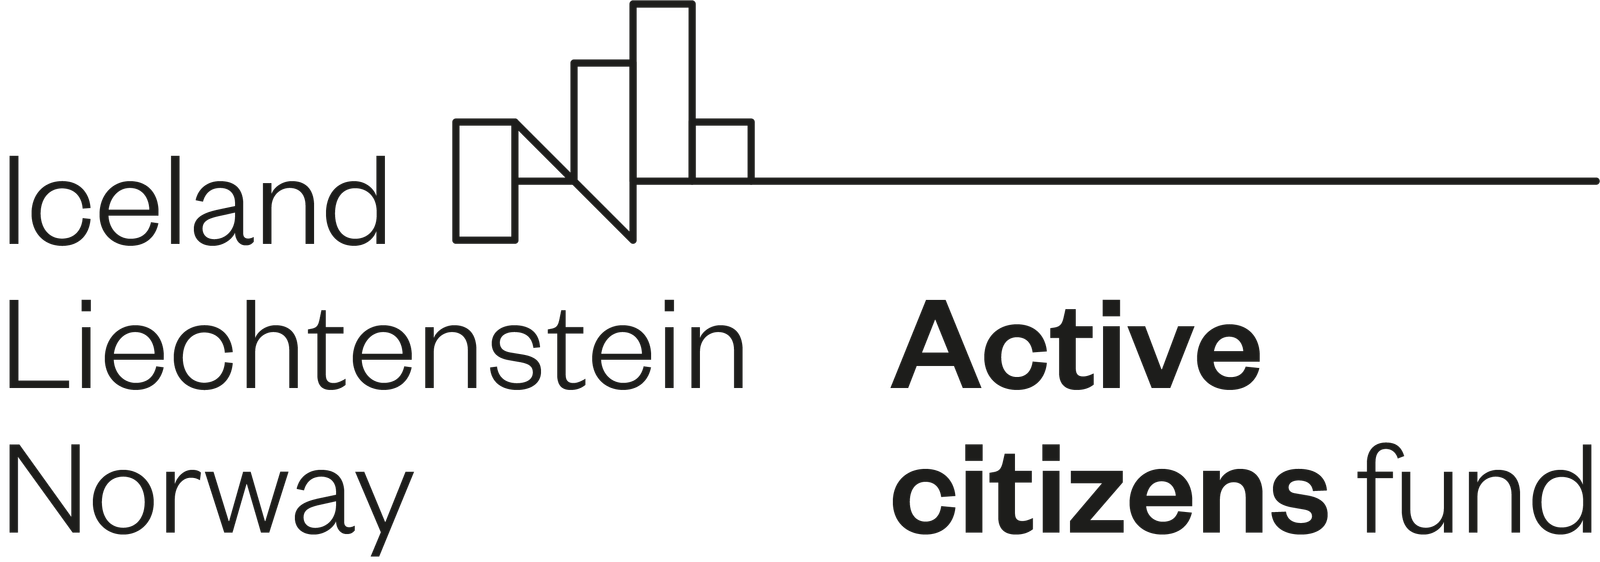 Active Citizens Fund@4x